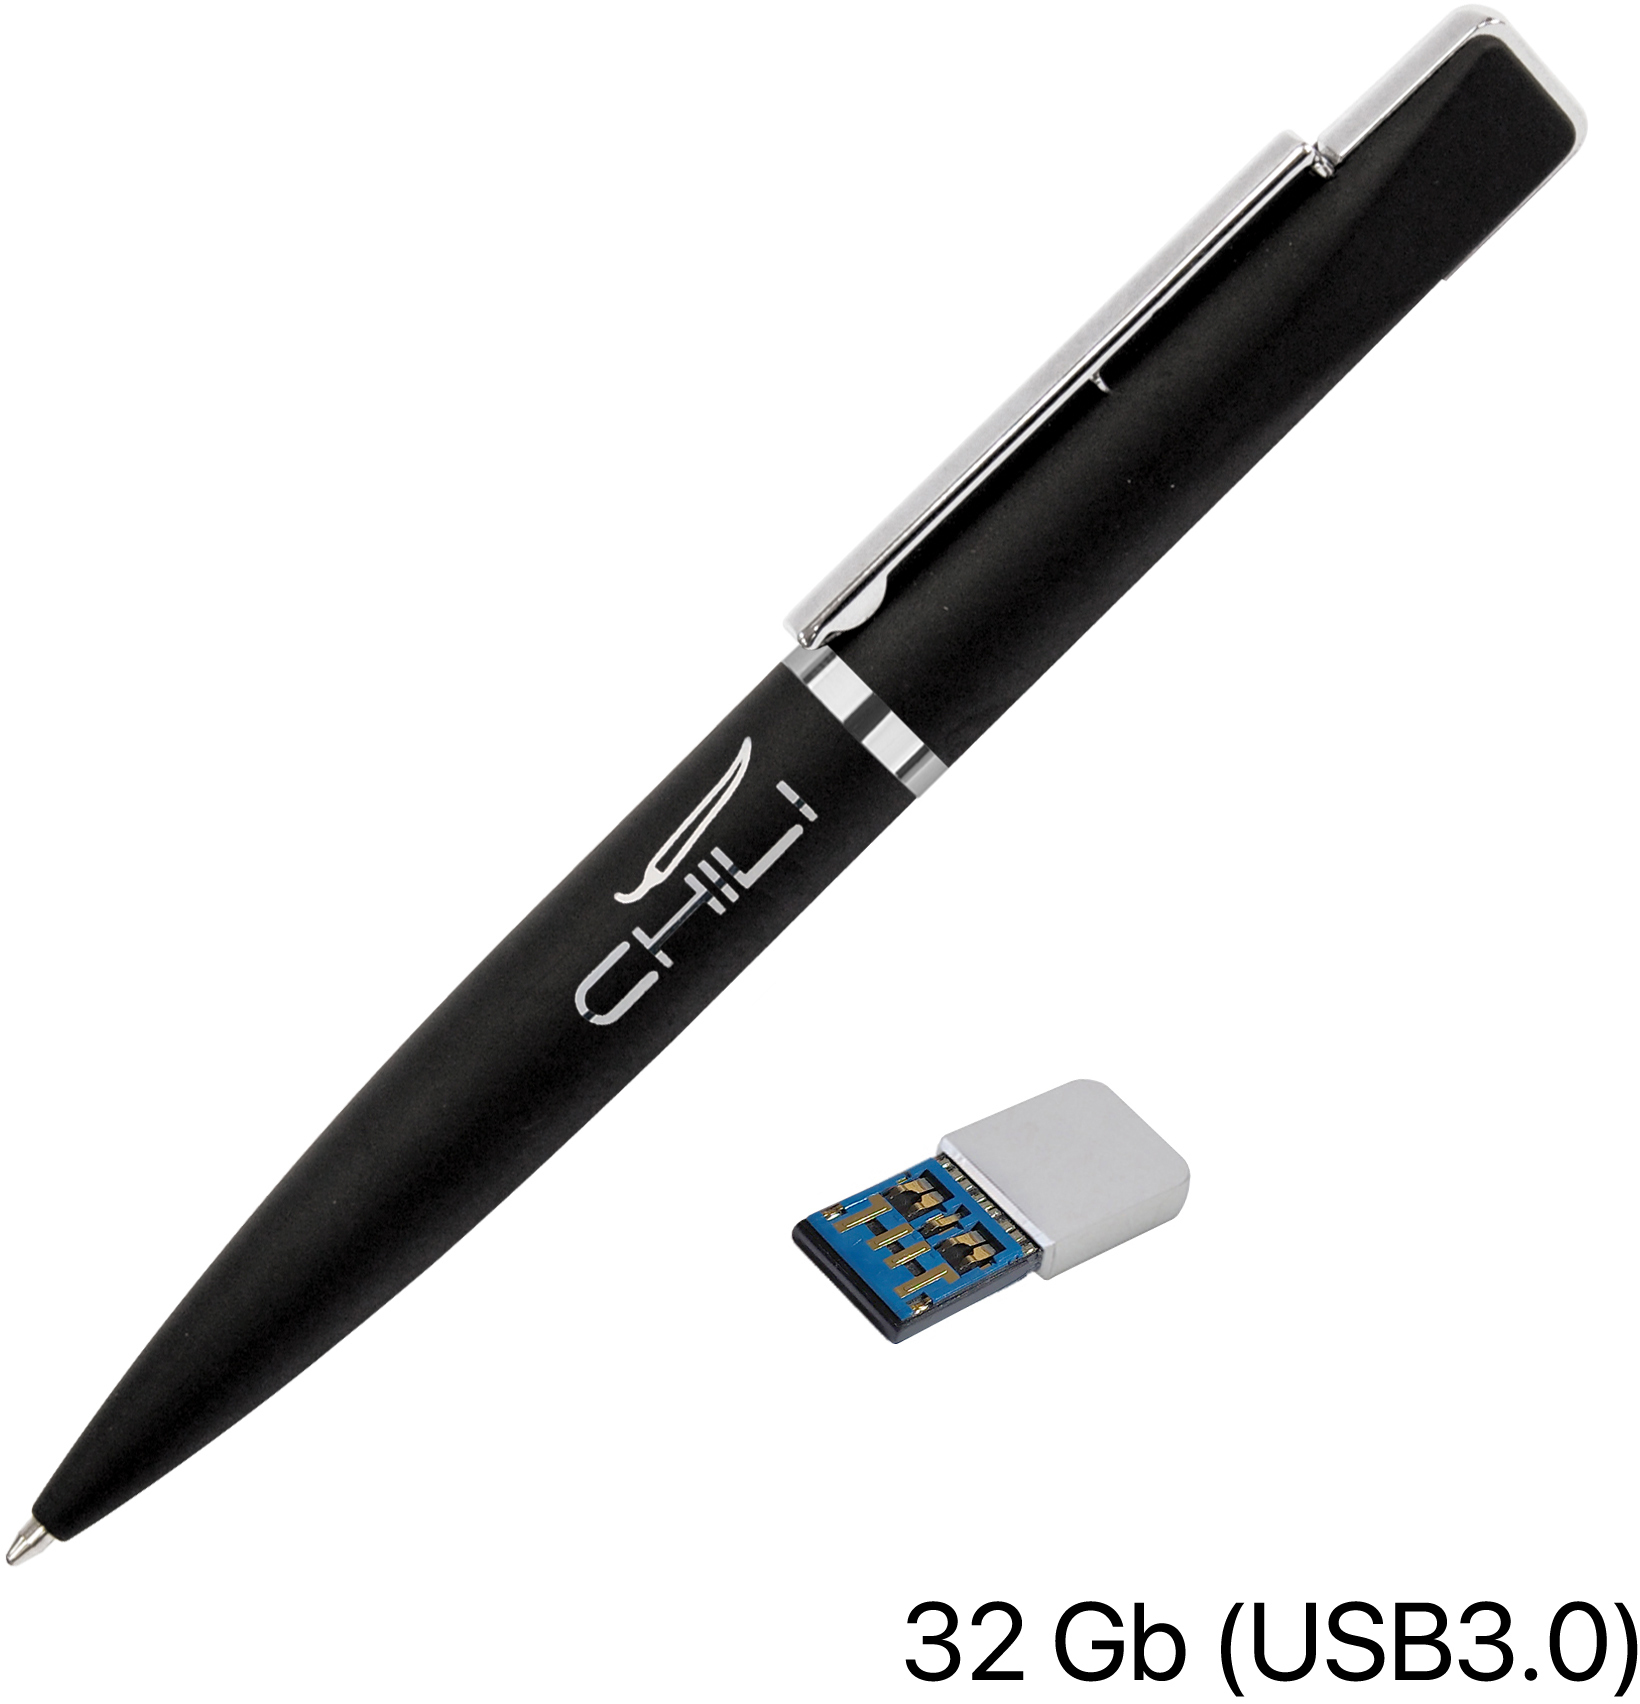 Артикул: E6828-3S/32Gb3 — Ручка шариковая "Callisto" с флеш-картой 32Gb (USB3.0), покрытие soft touch